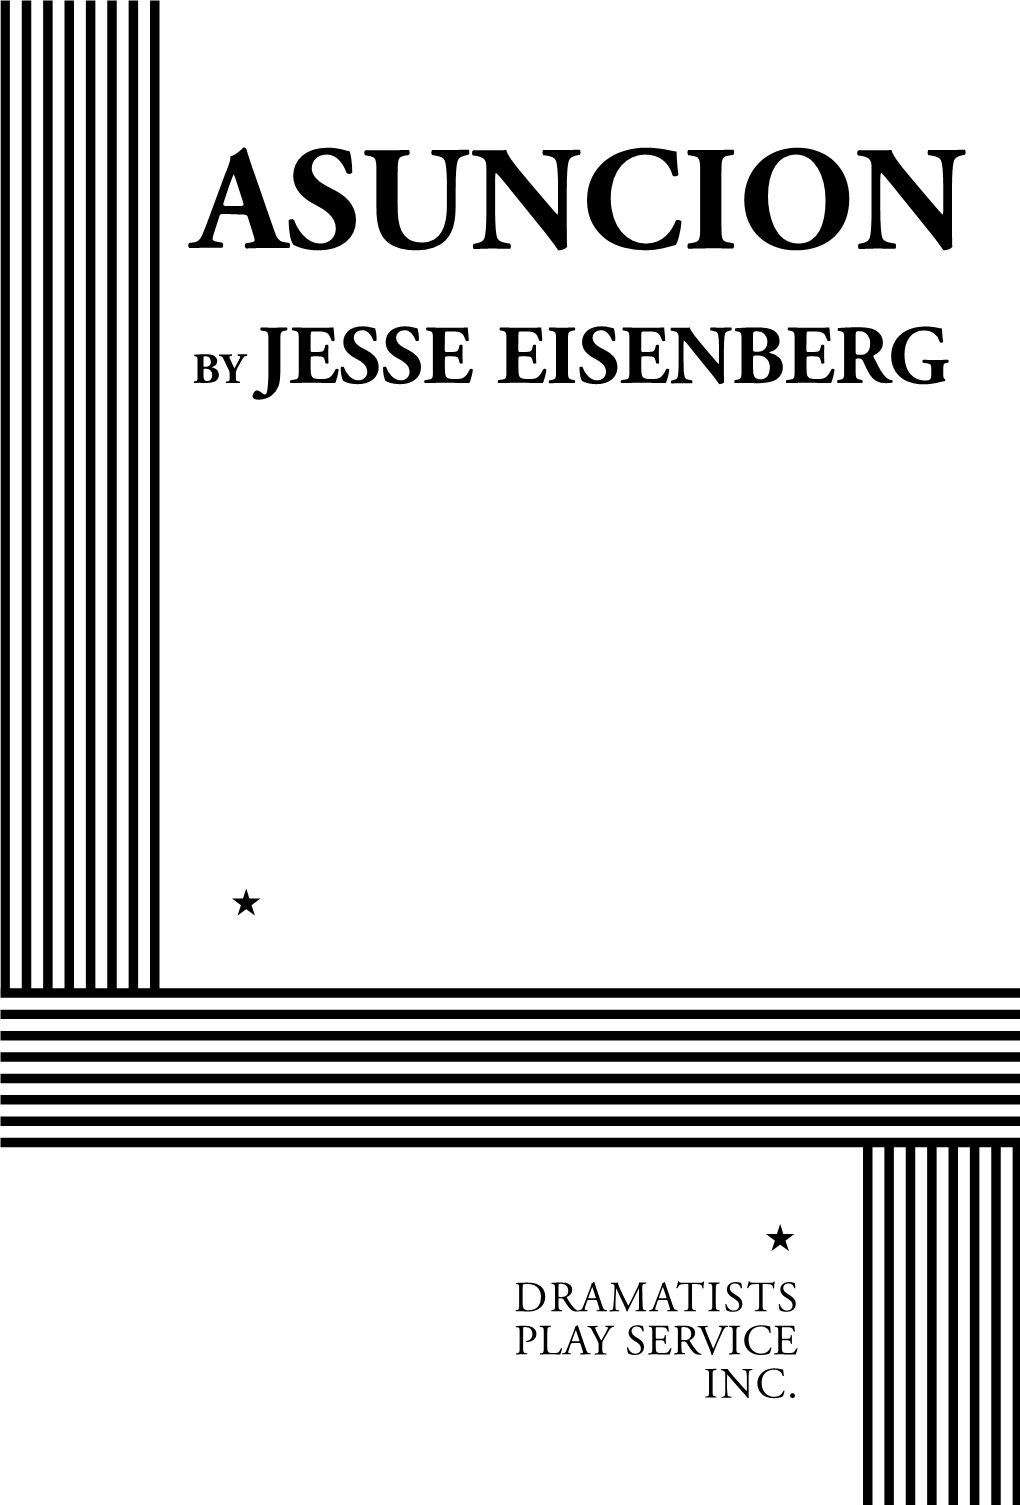 ASUNCION by Jesse Eisenberg